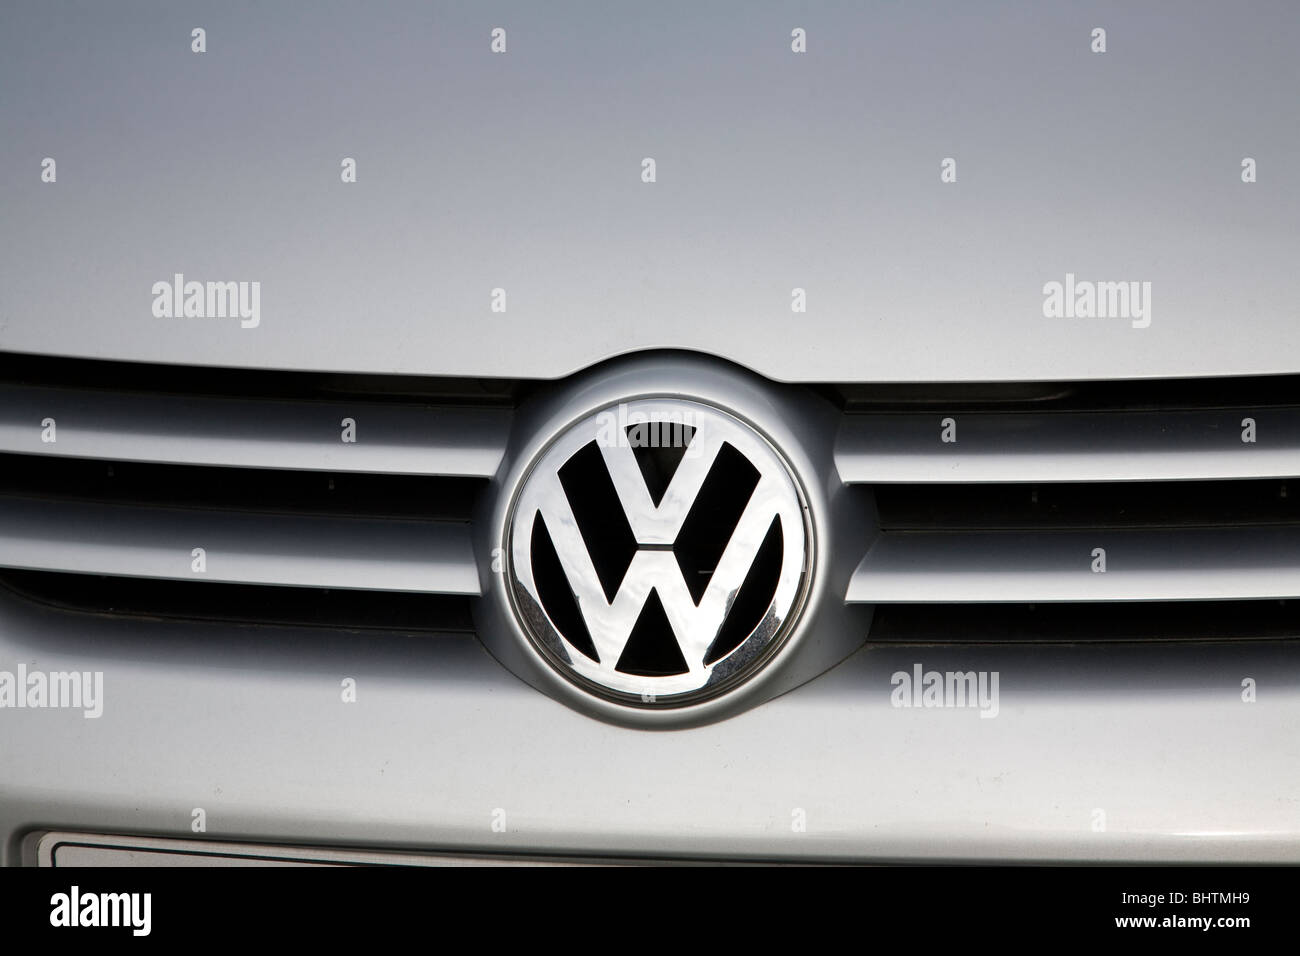 VW Volkswagen car logo symbol Stock Photo